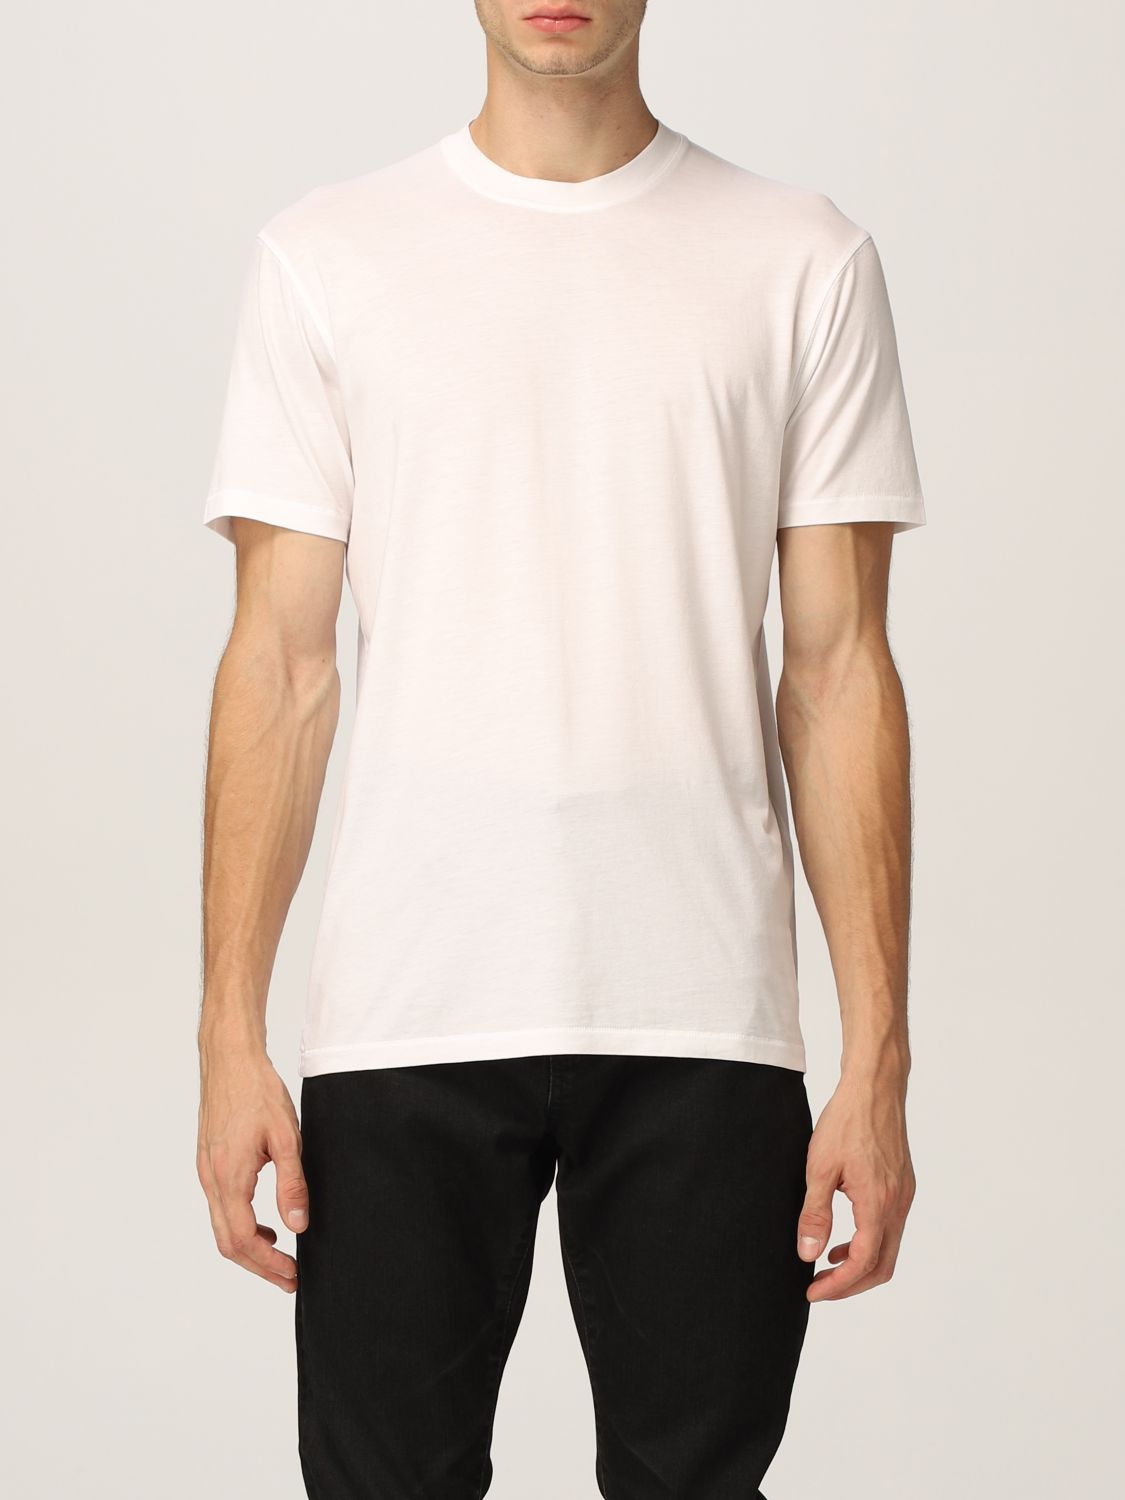 Camiseta Tom Ford: Camiseta hombre Tom Ford blanco 1